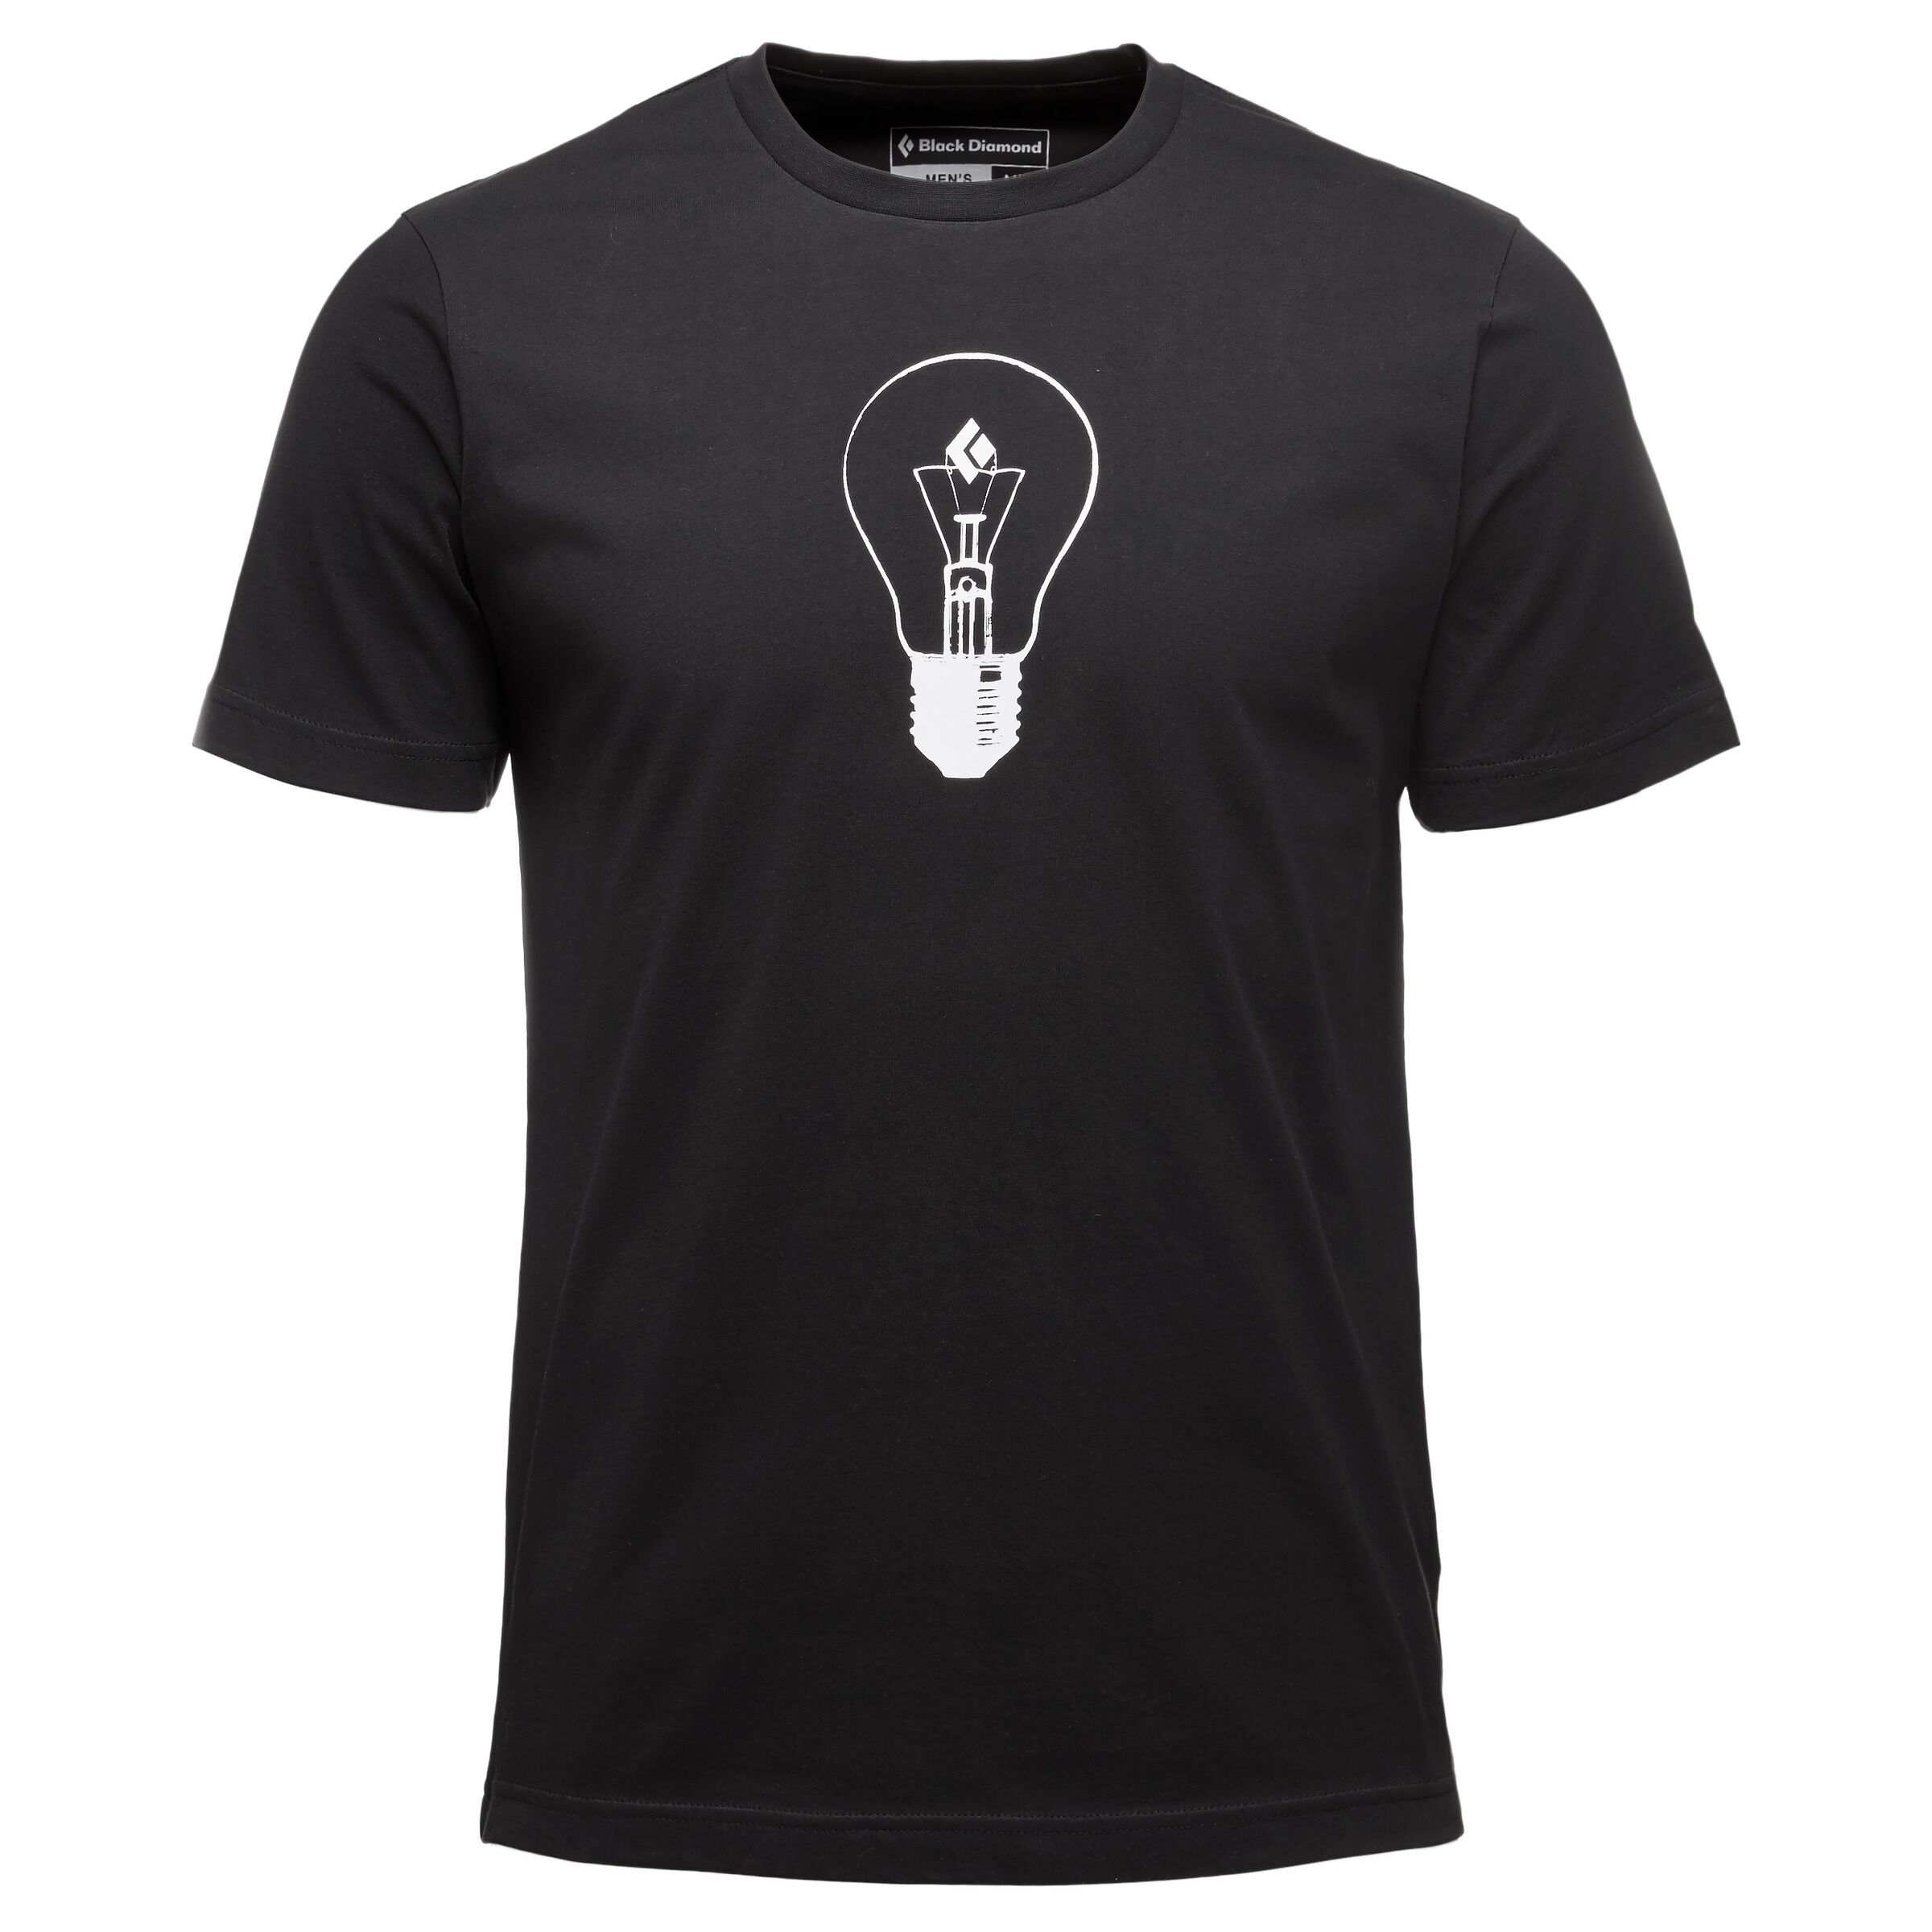 Black Diamond Bd Idea Tee - T-shirt Herrer